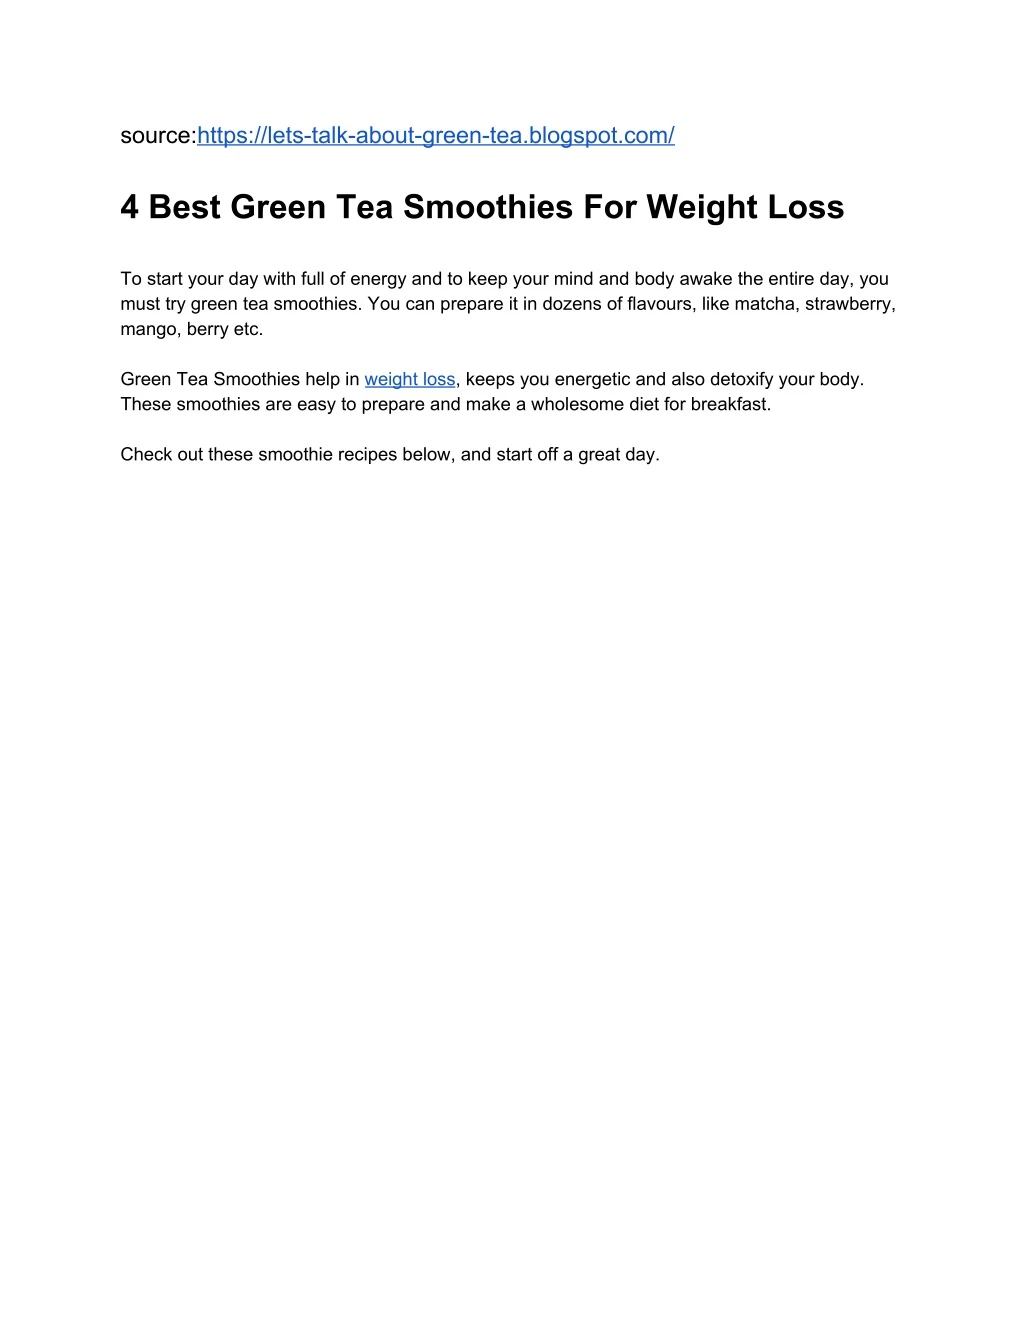 source https lets talk about green tea blogspot